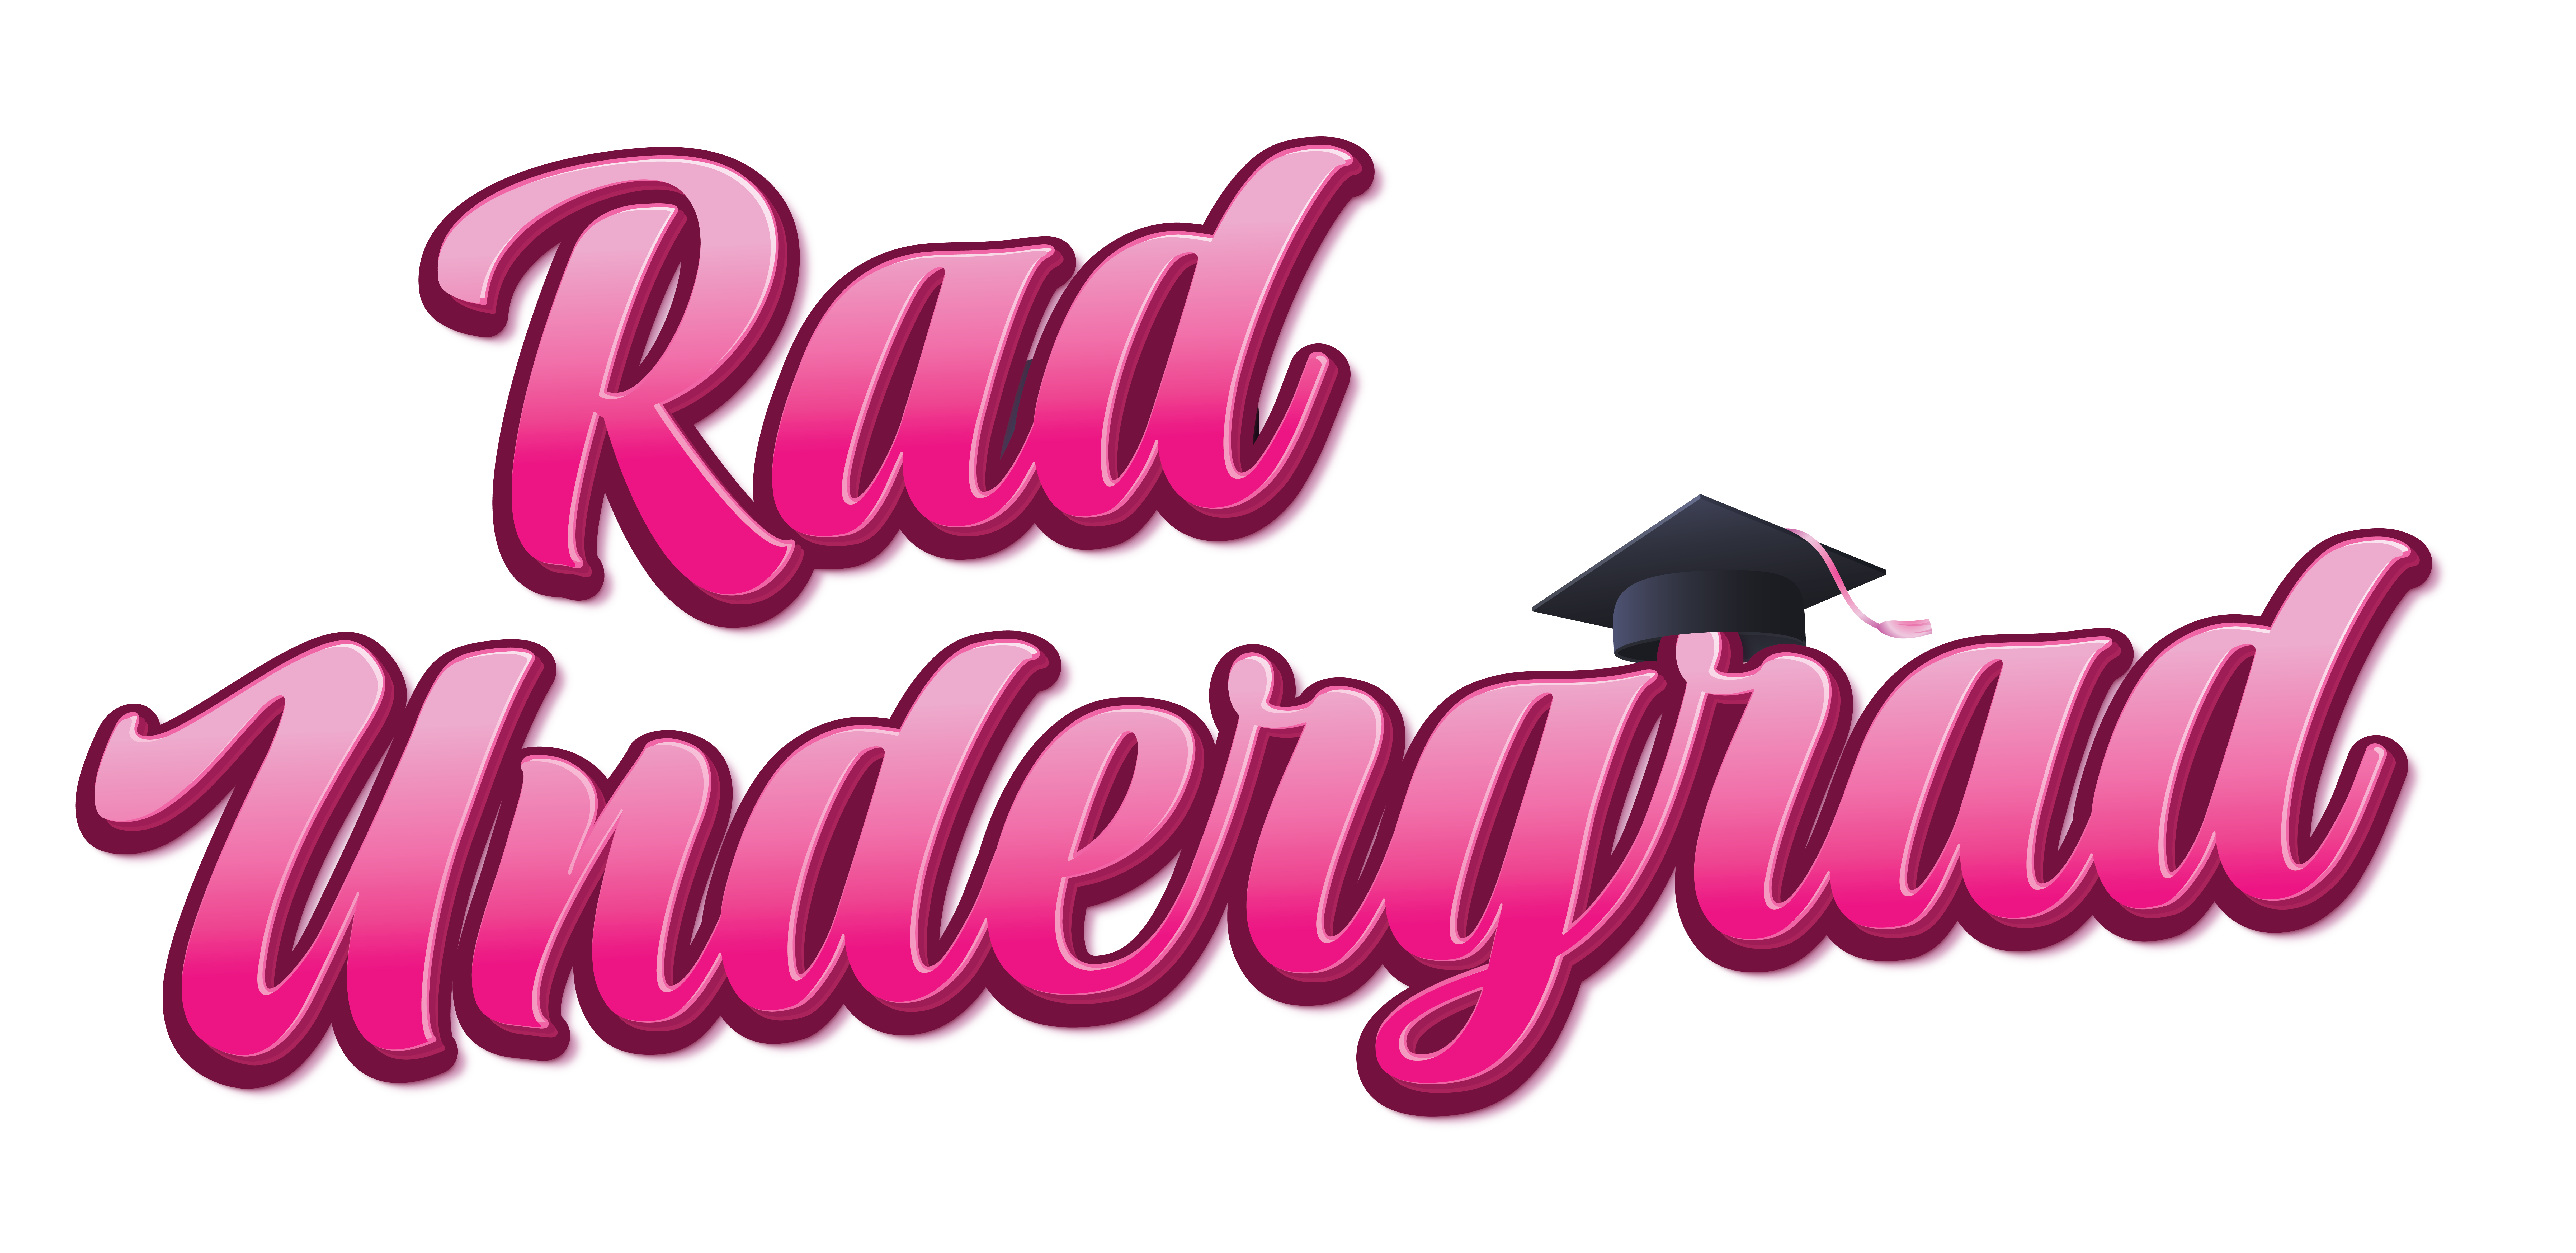 Radundergrad.com